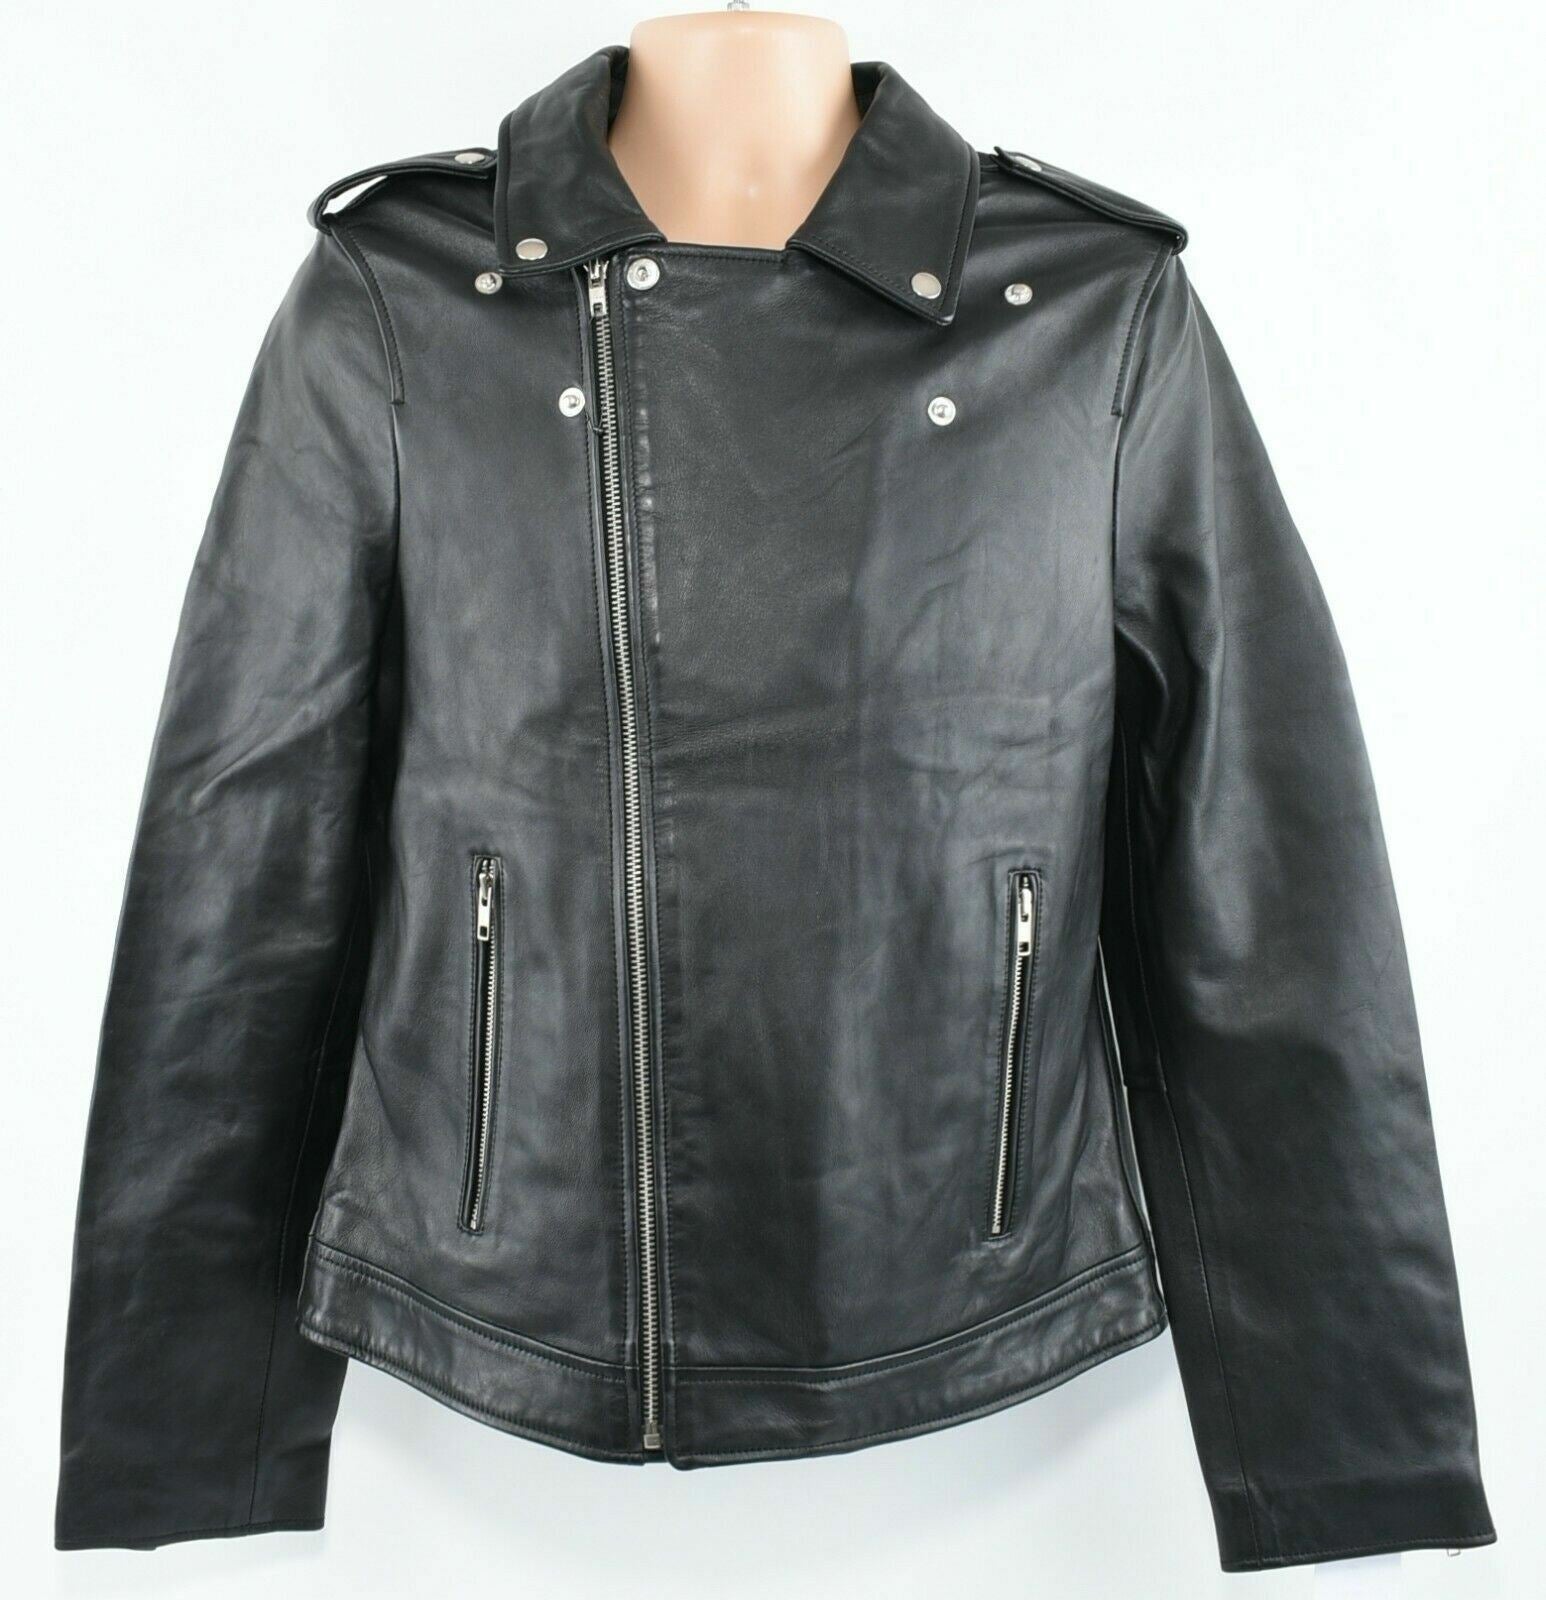 BOLONGARO TREVOR - Men's Genuine Sheepskin Leather Biker Jacket, Black, size M